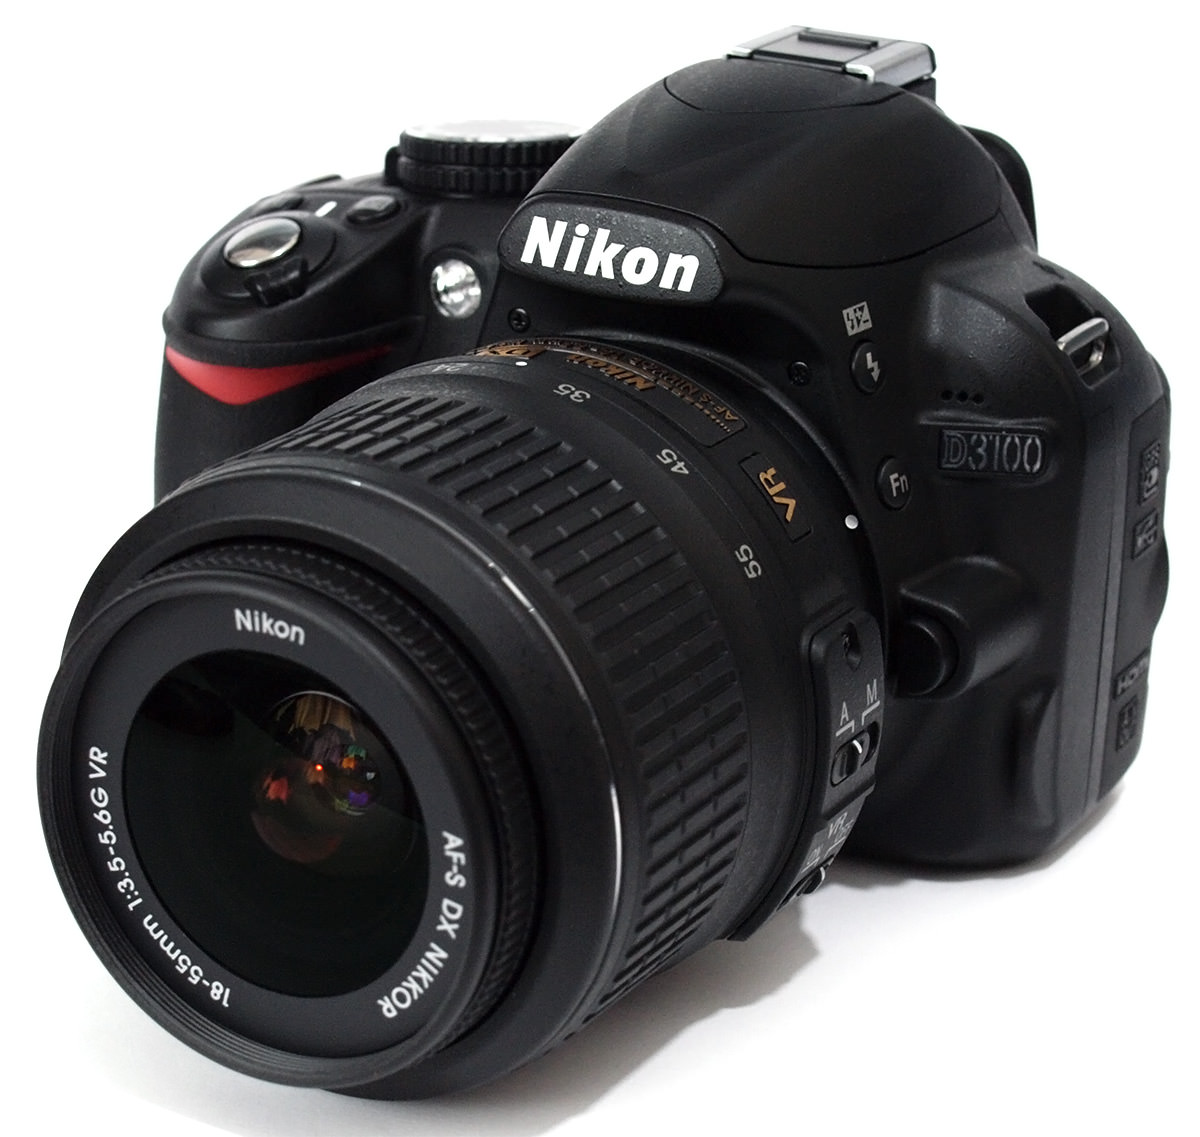 Nikon D3100 Digital SLR Review